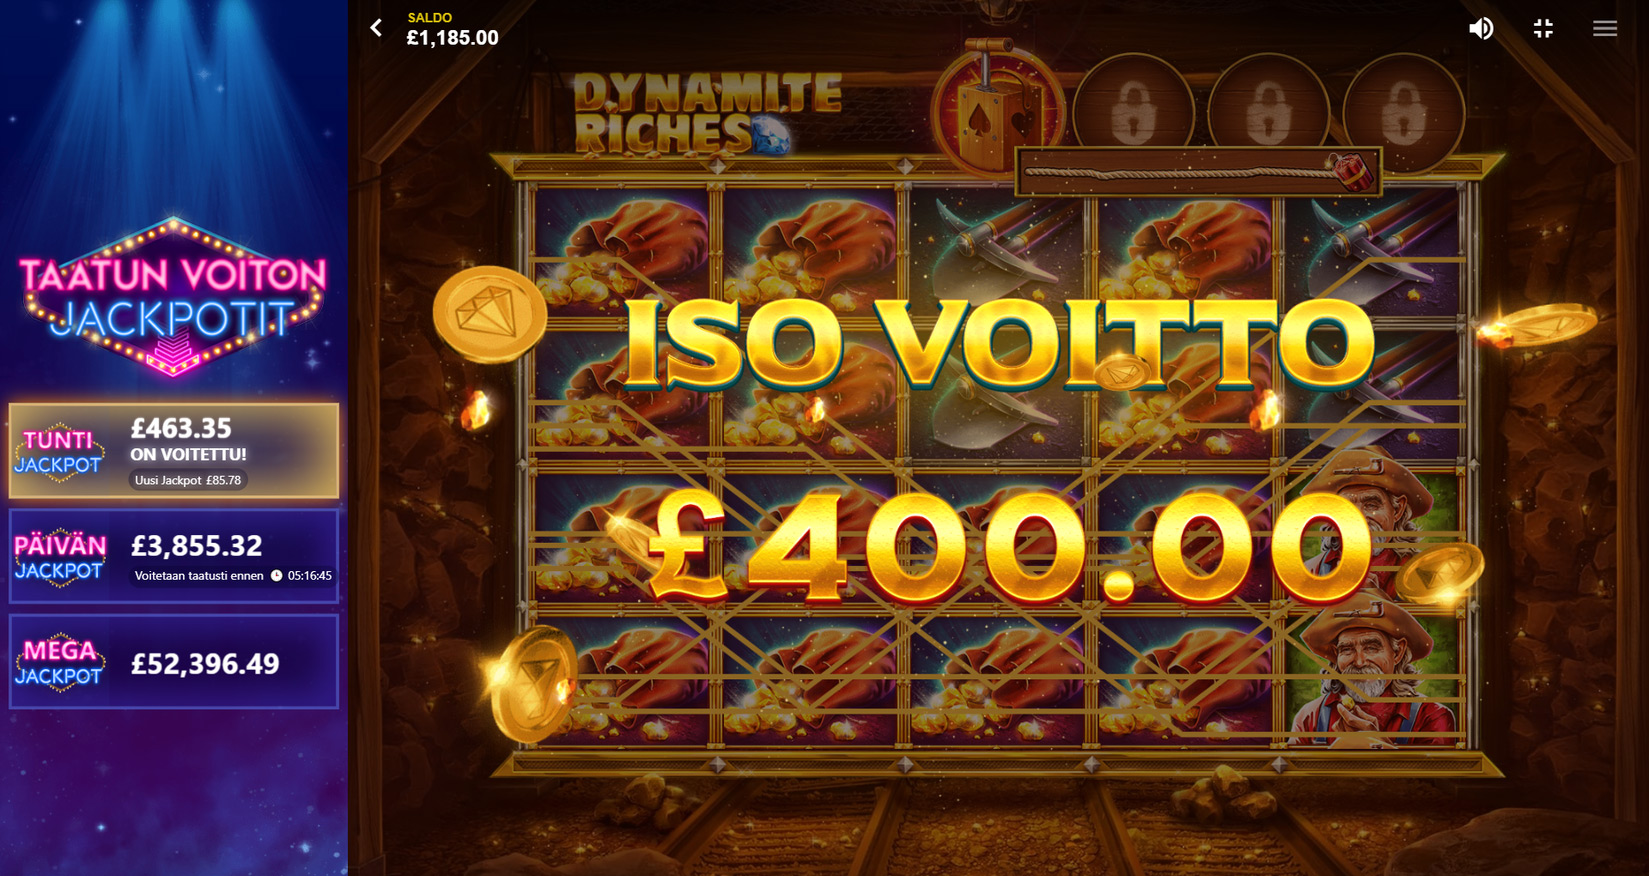 Dynamite Riches Jackpot